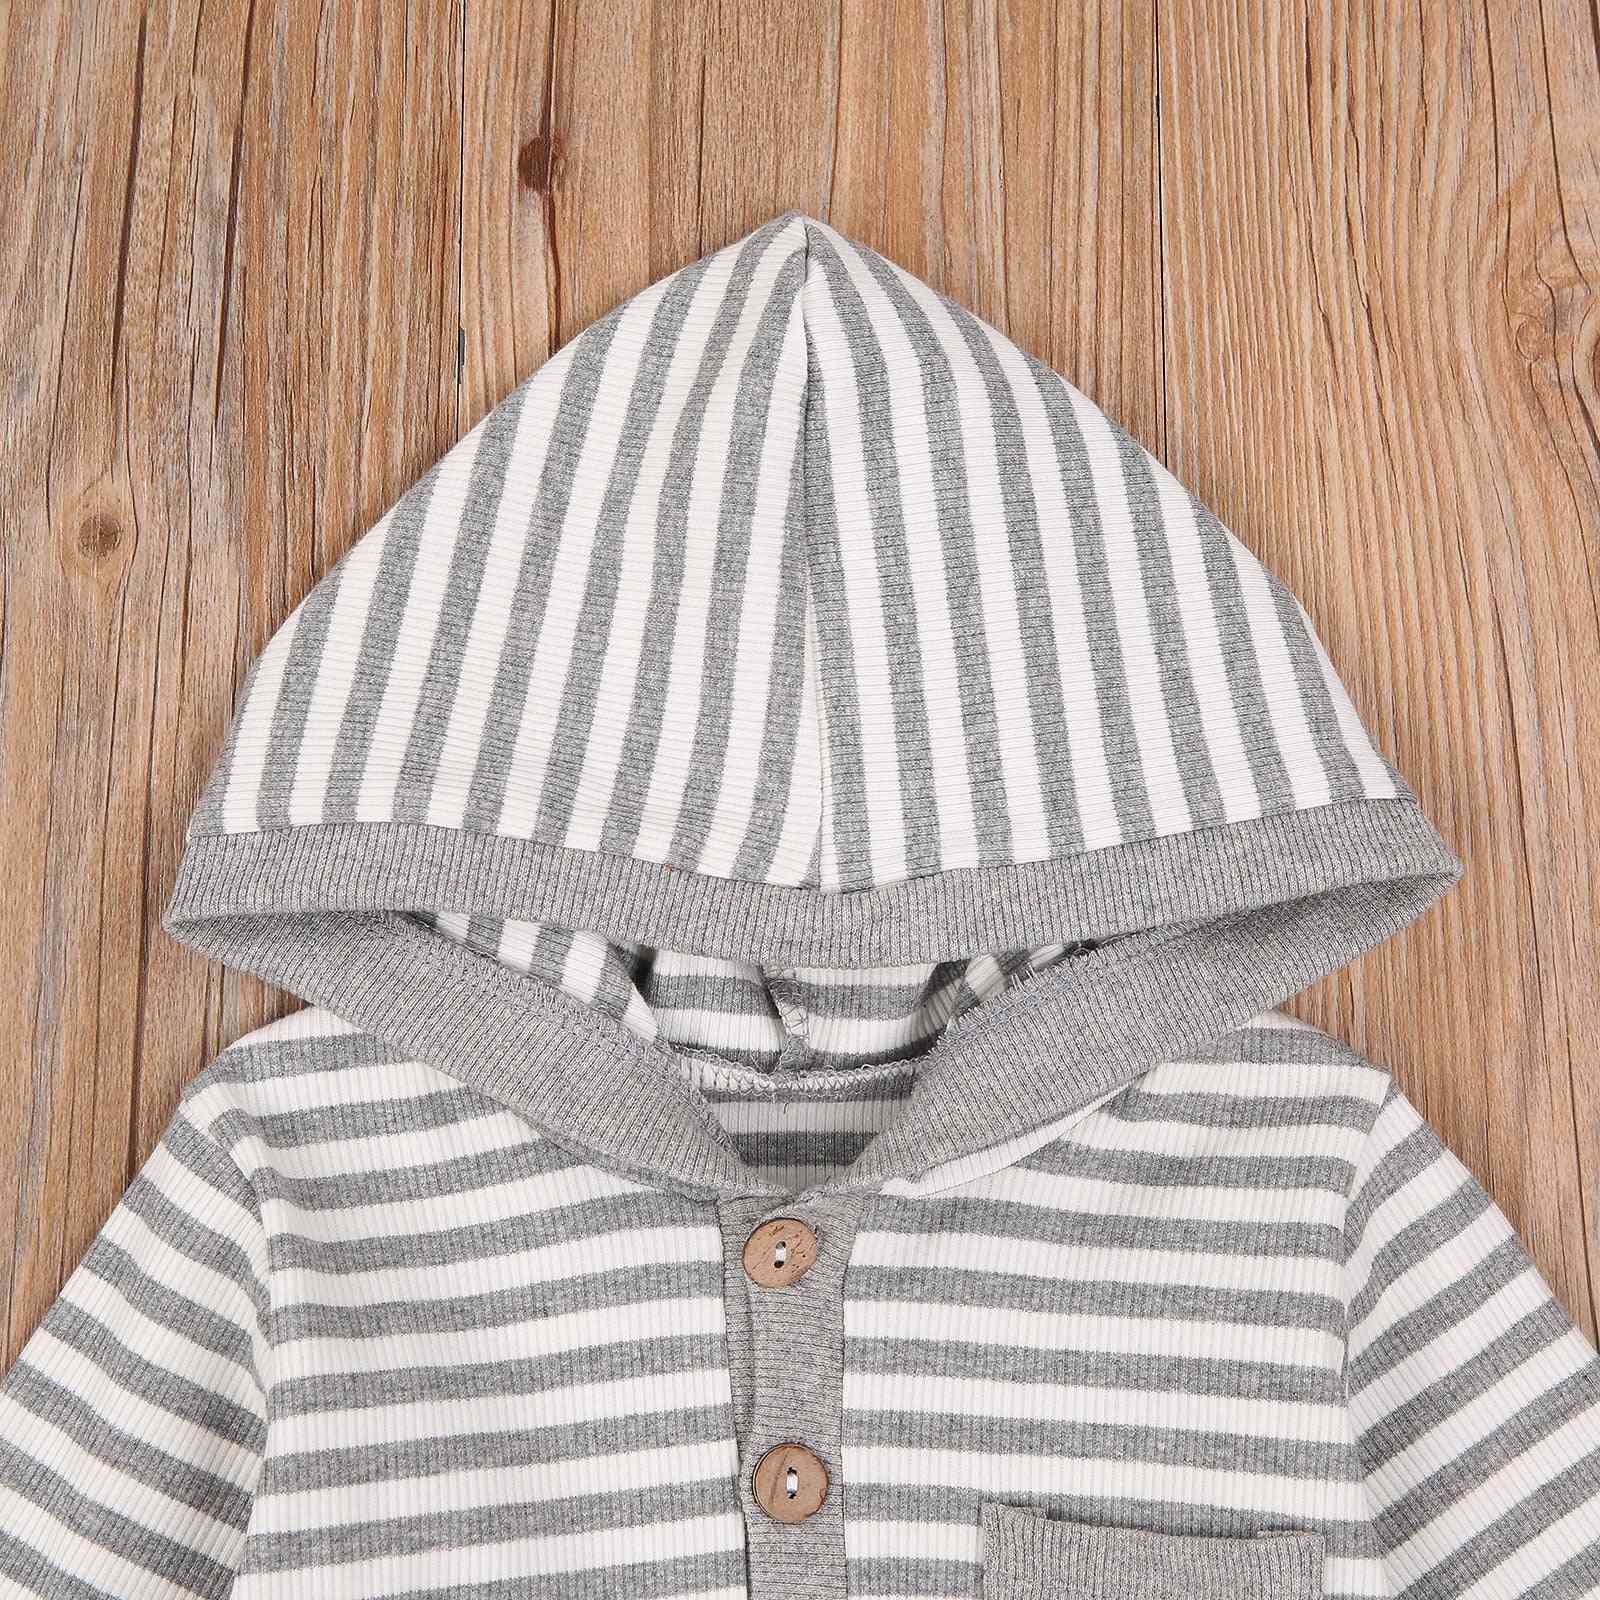 Newborn Baby Long Sleeve Striped Button Hooded Sweatshirt Casual Pocket Tops